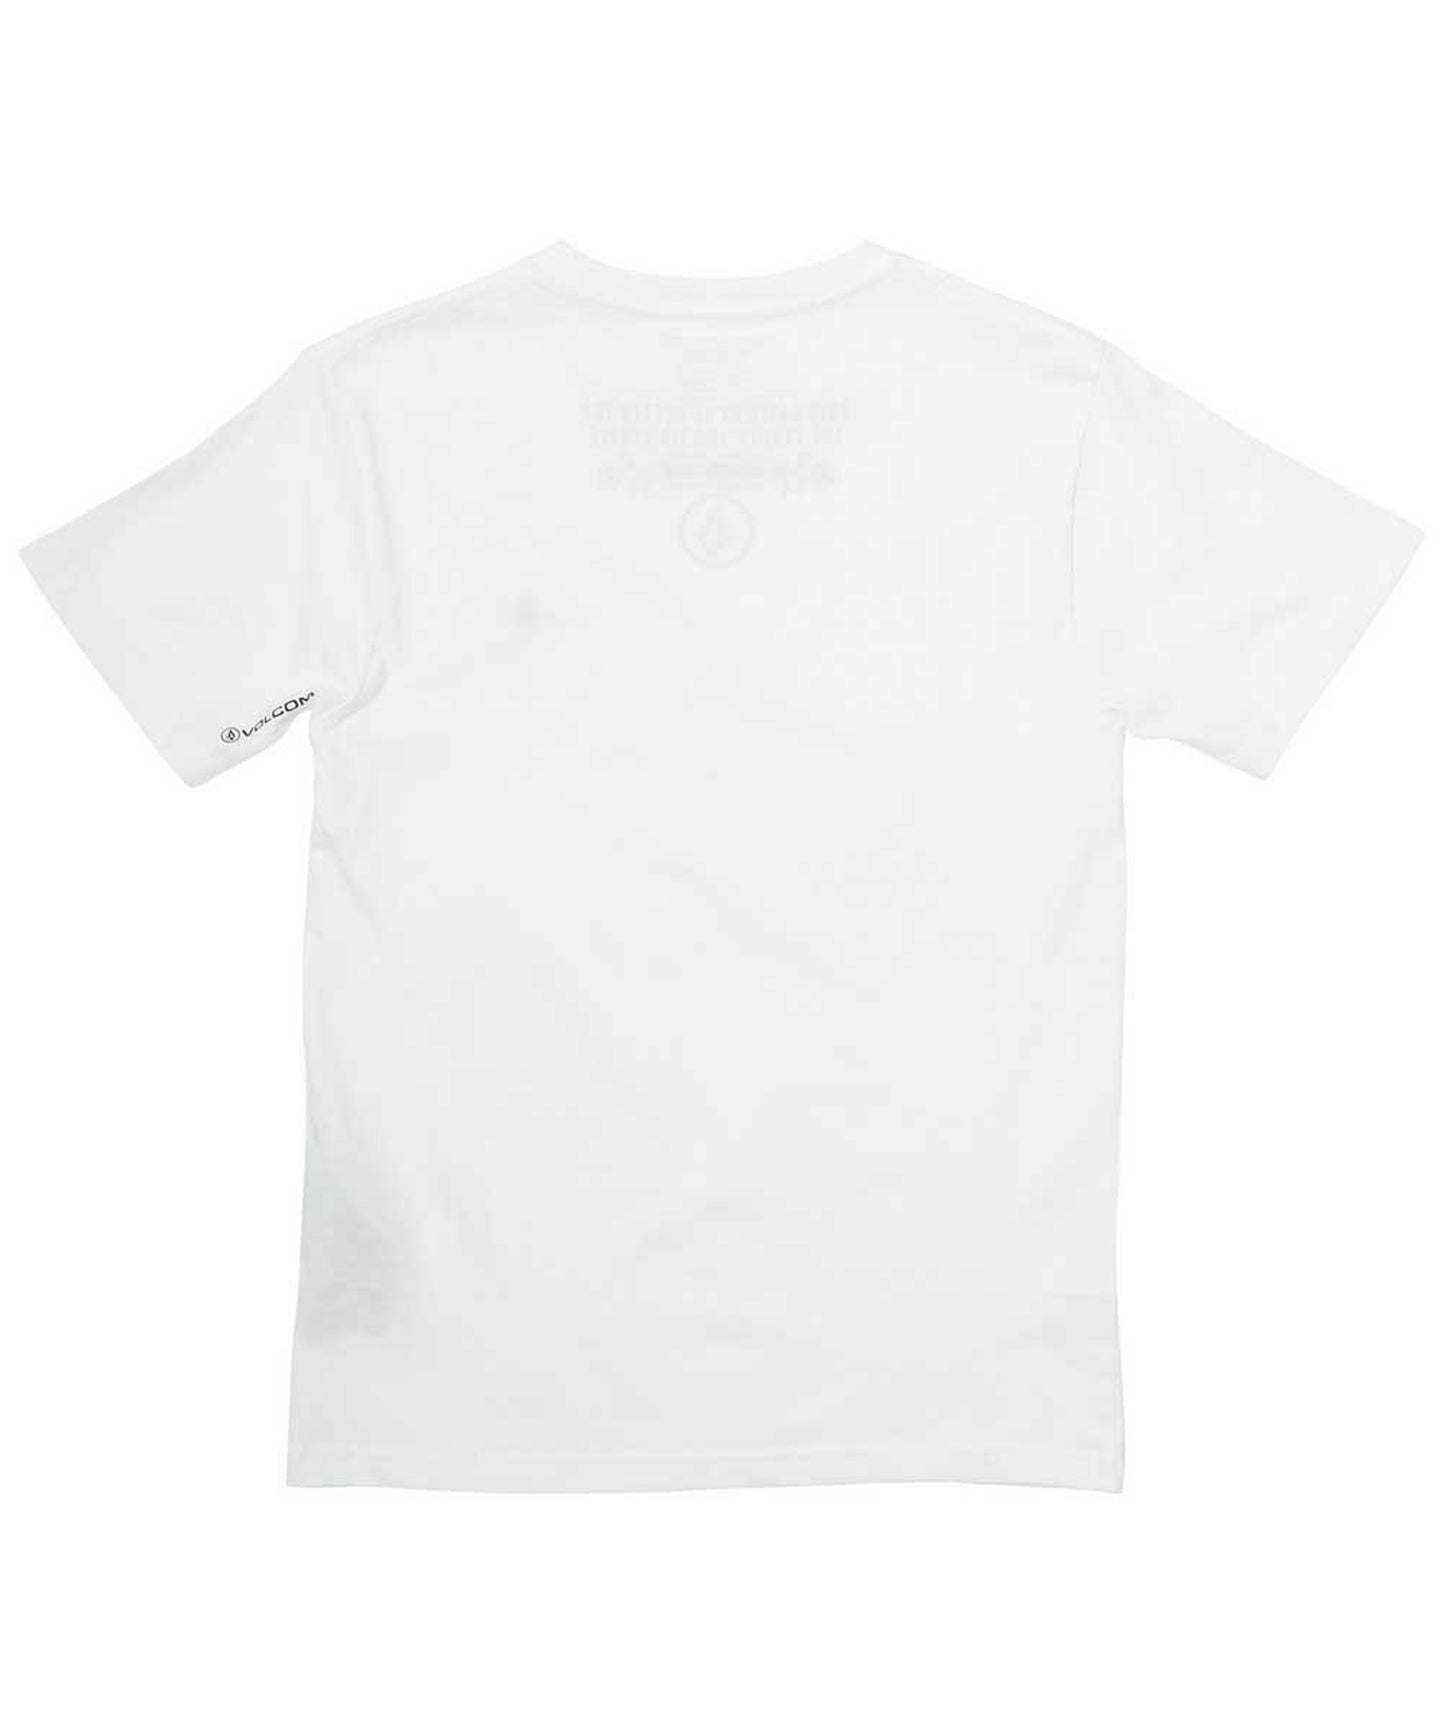 volcom-volcom-youth-camiseta-circle stone-white-camiseta para niño/a-color blanco-cuello redondo-algodón orgánico-serigrafia volcom en todo el pecho.